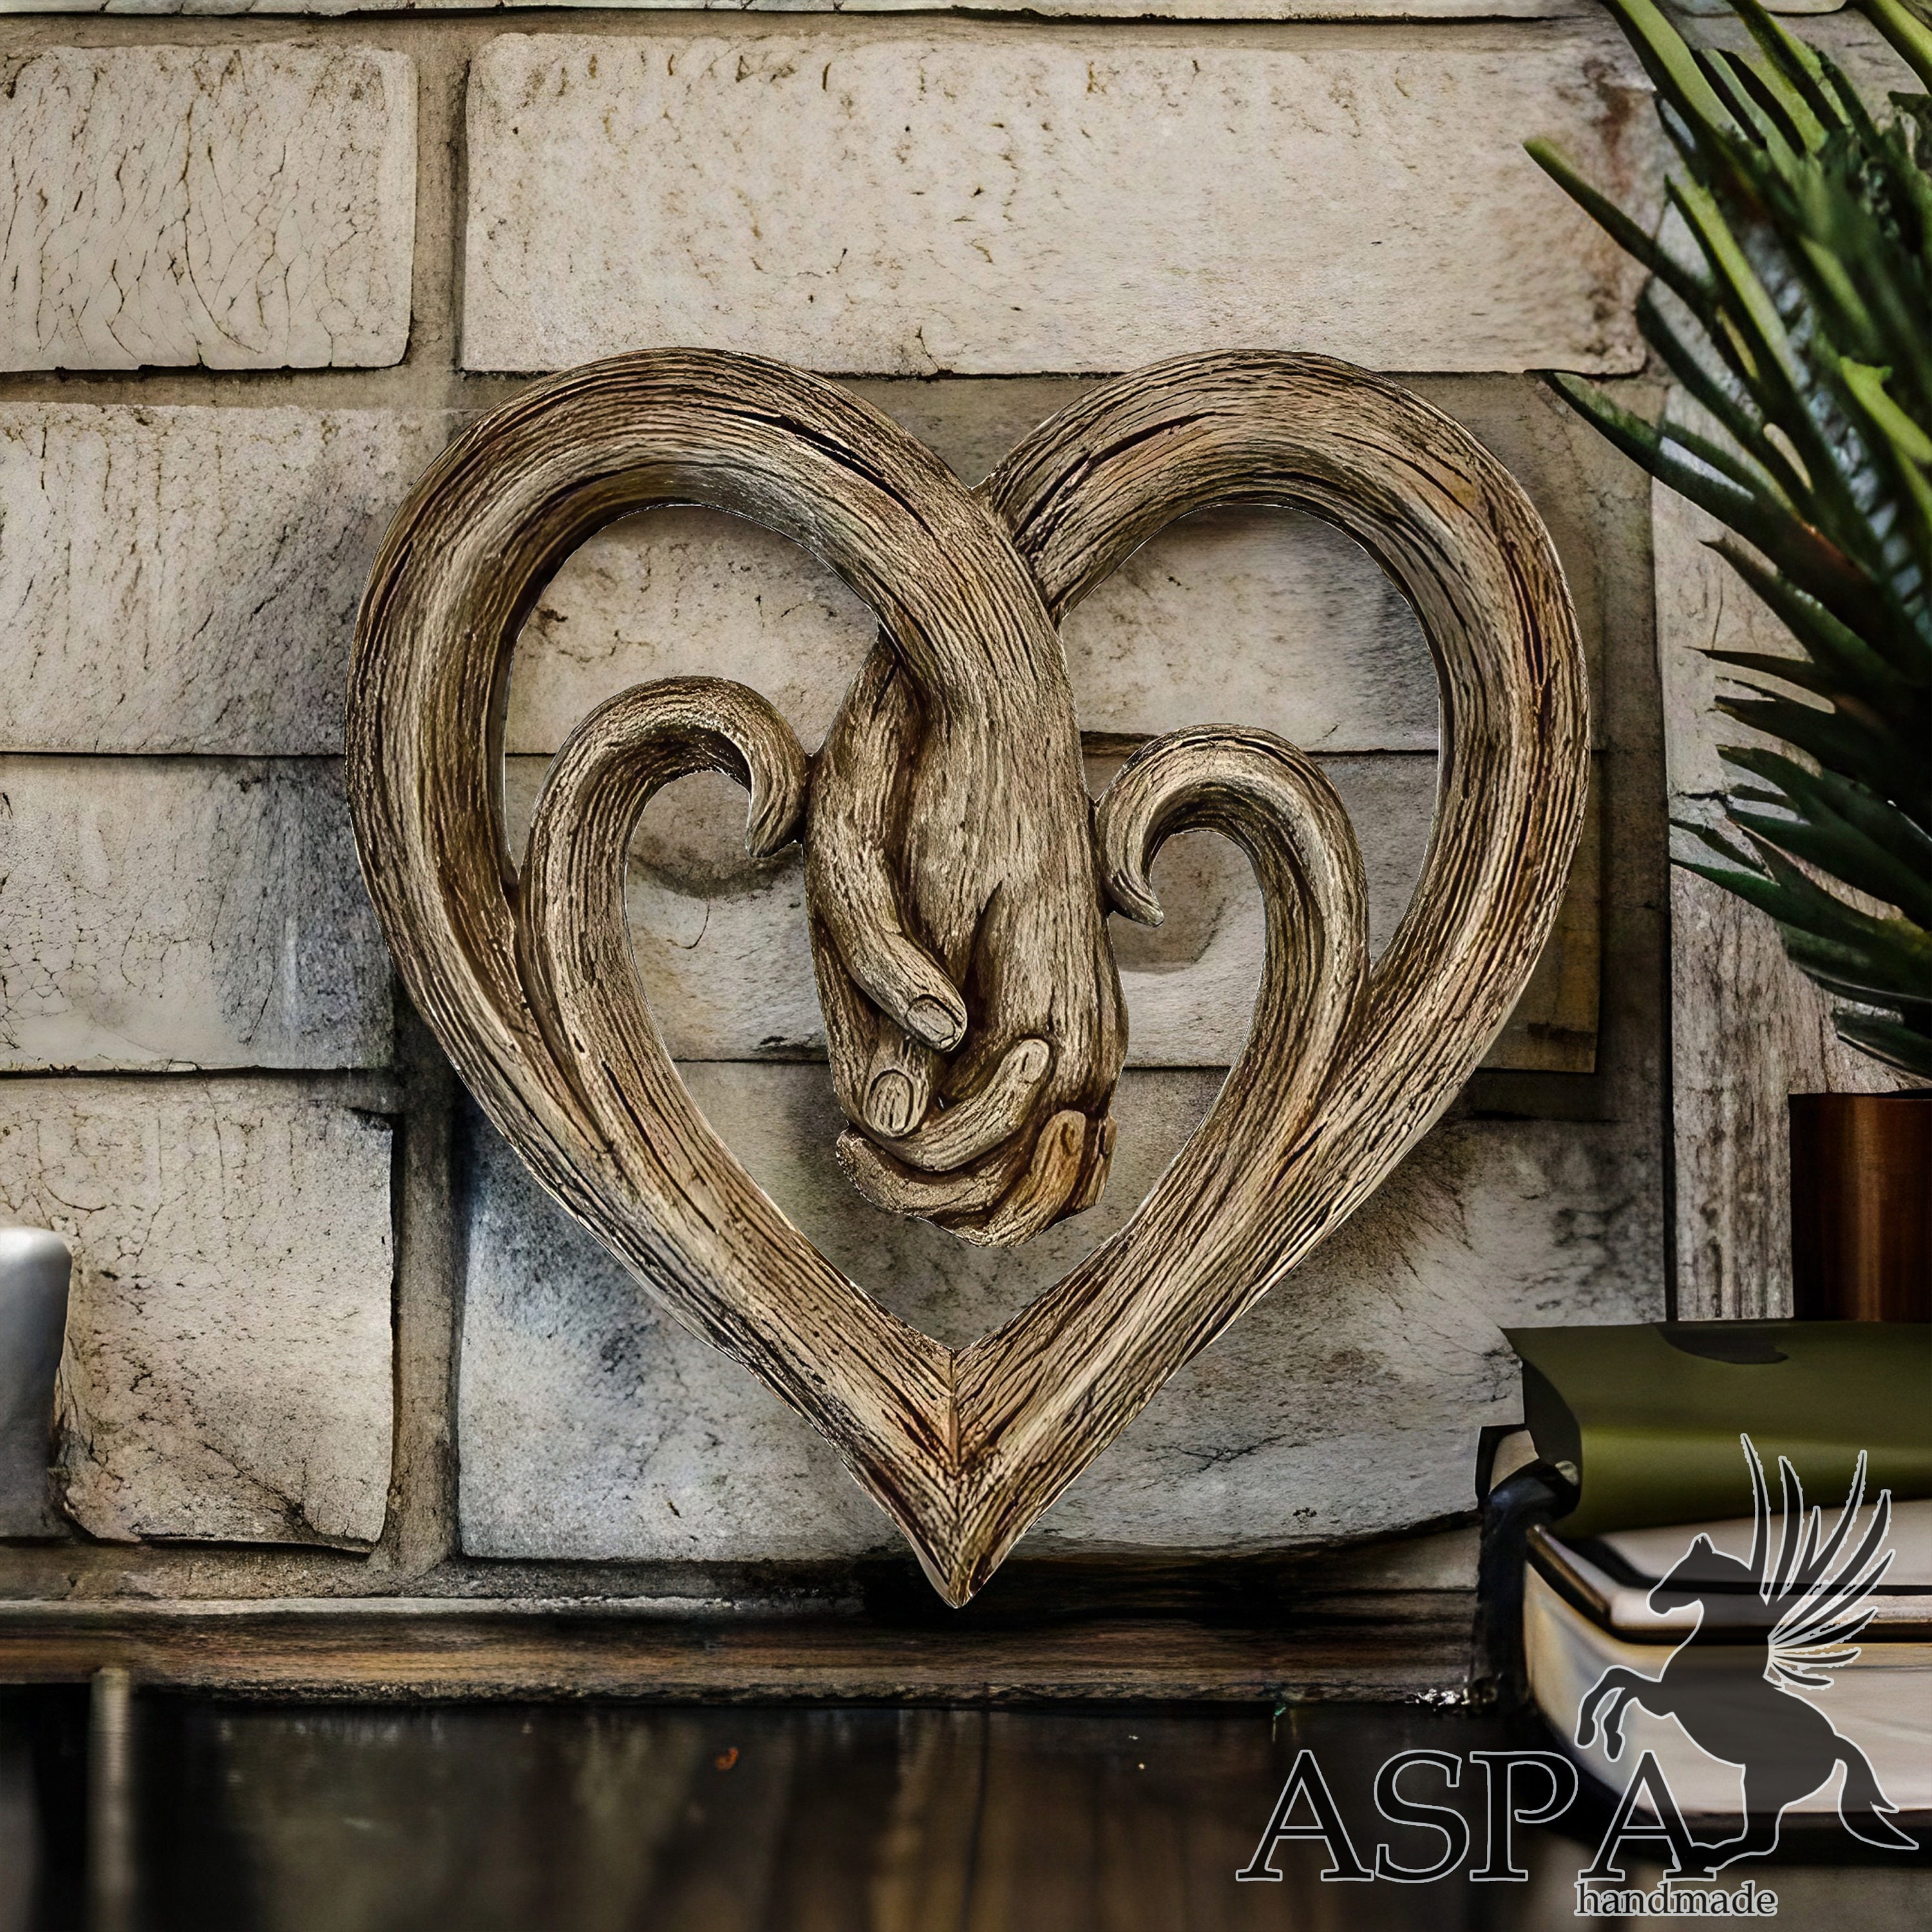 Wood Heart Sculpture Decor Rustic Mended Heart Farmhouse Decor for